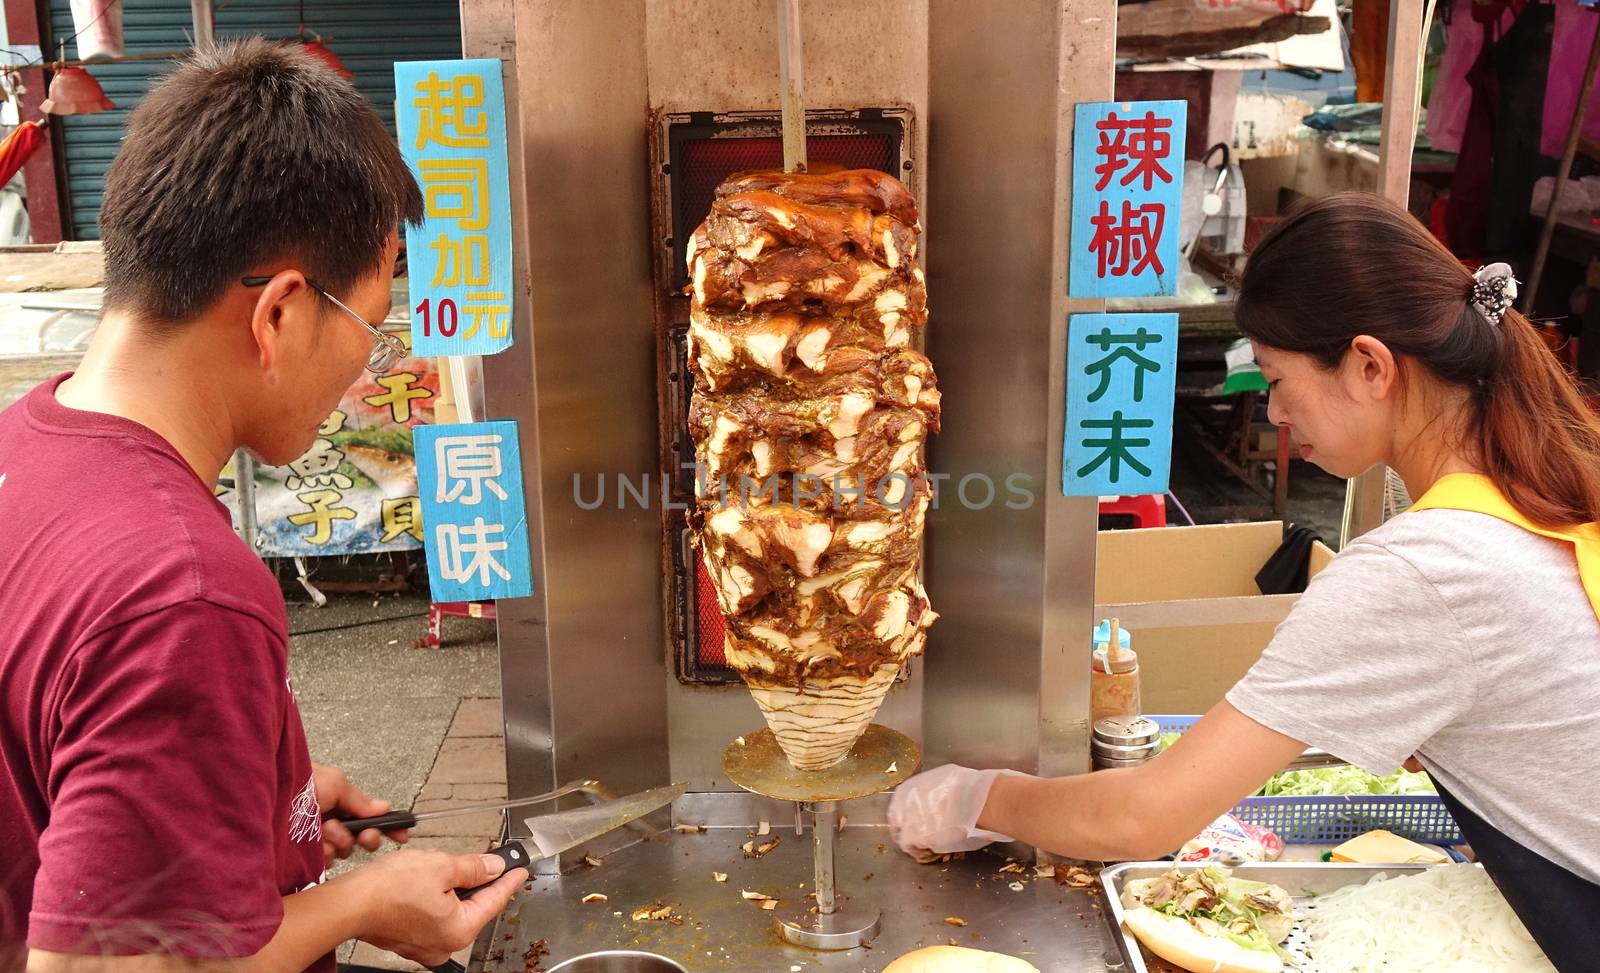 KAOHSIUNG, TAIWAN -- OCTOBER 15, 2016: Two outdoor vendors prepare Shawarma in bread buns at a popular outdoor market.